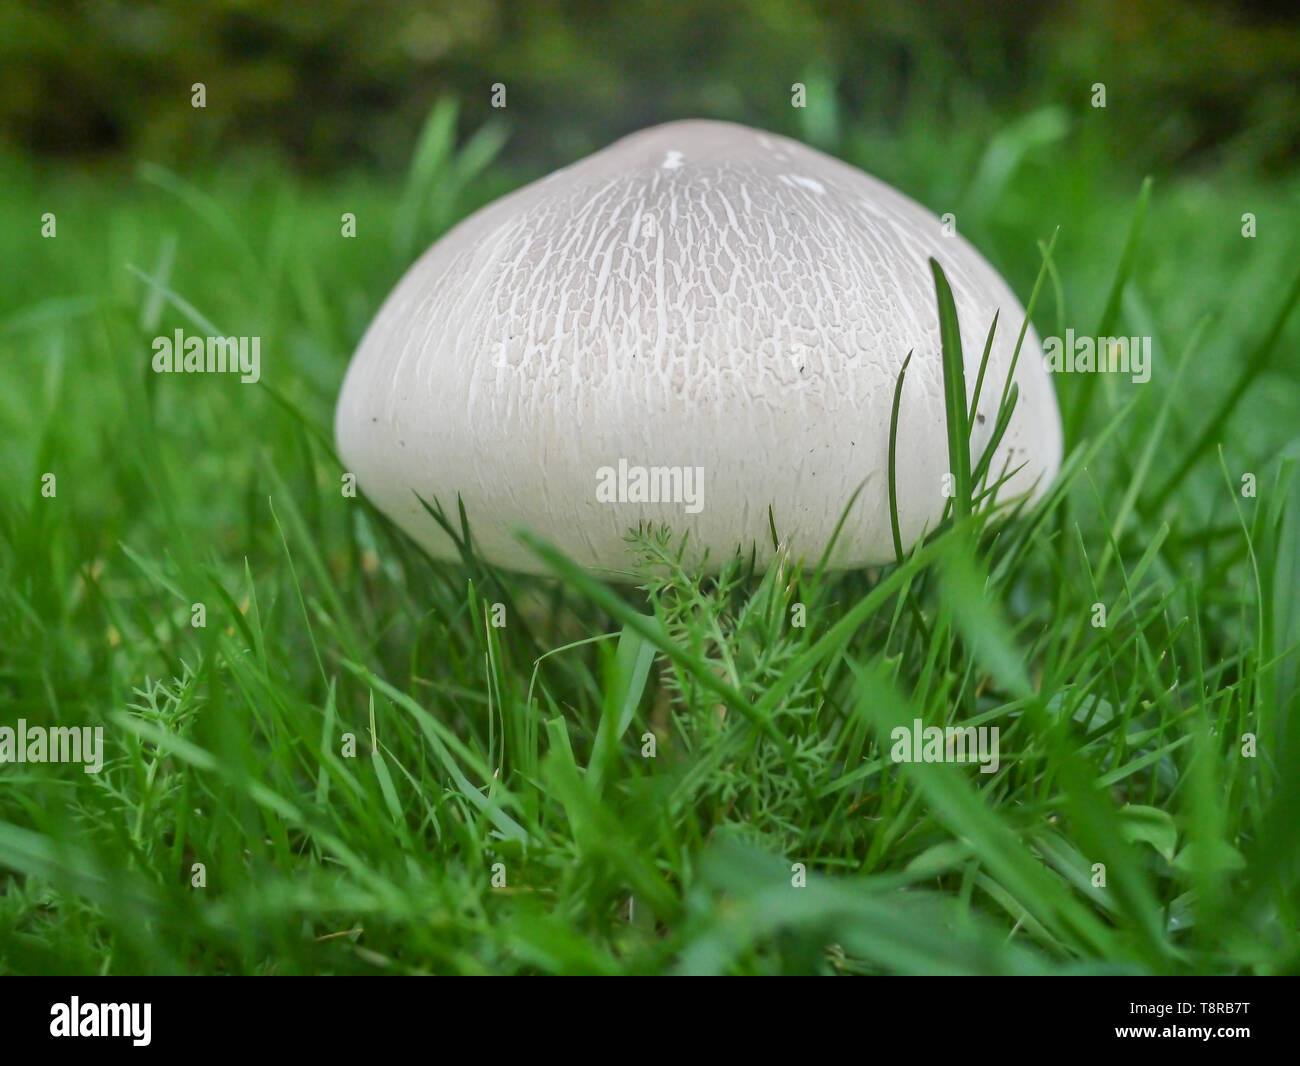 Closeup shot of a field mushroom peeping up through grass. Stock Photo